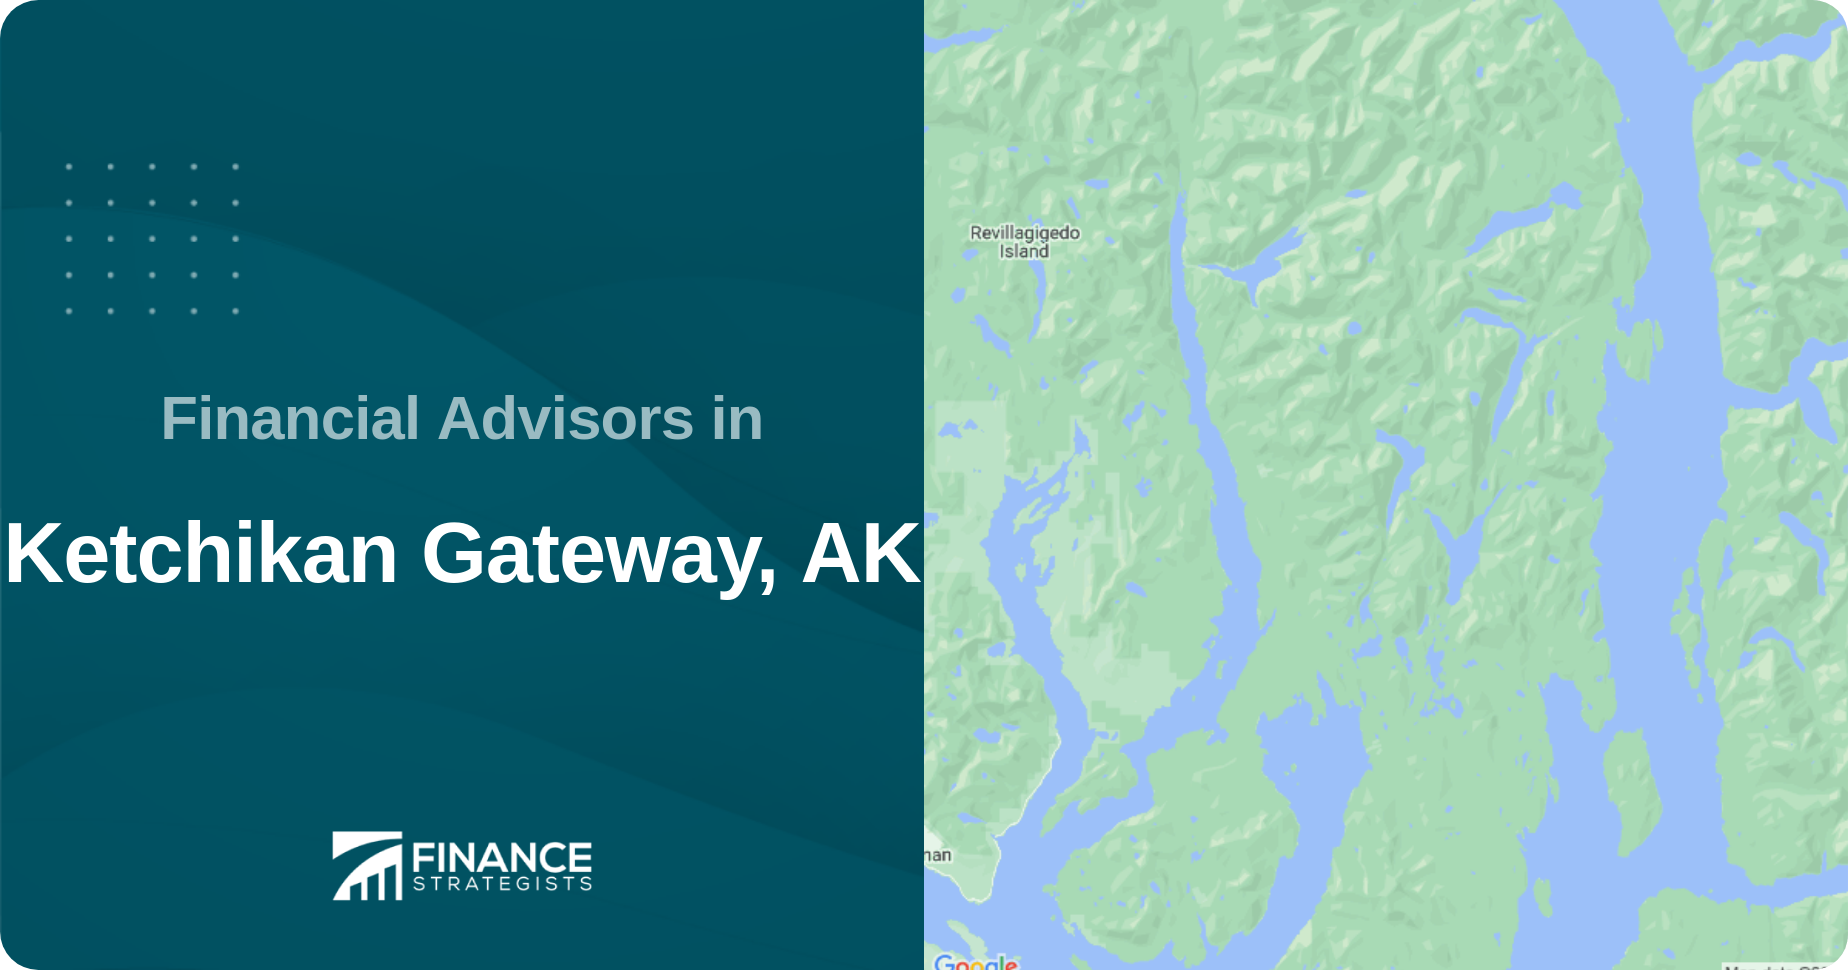 Financial Advisors in Ketchikan Gateway, AK